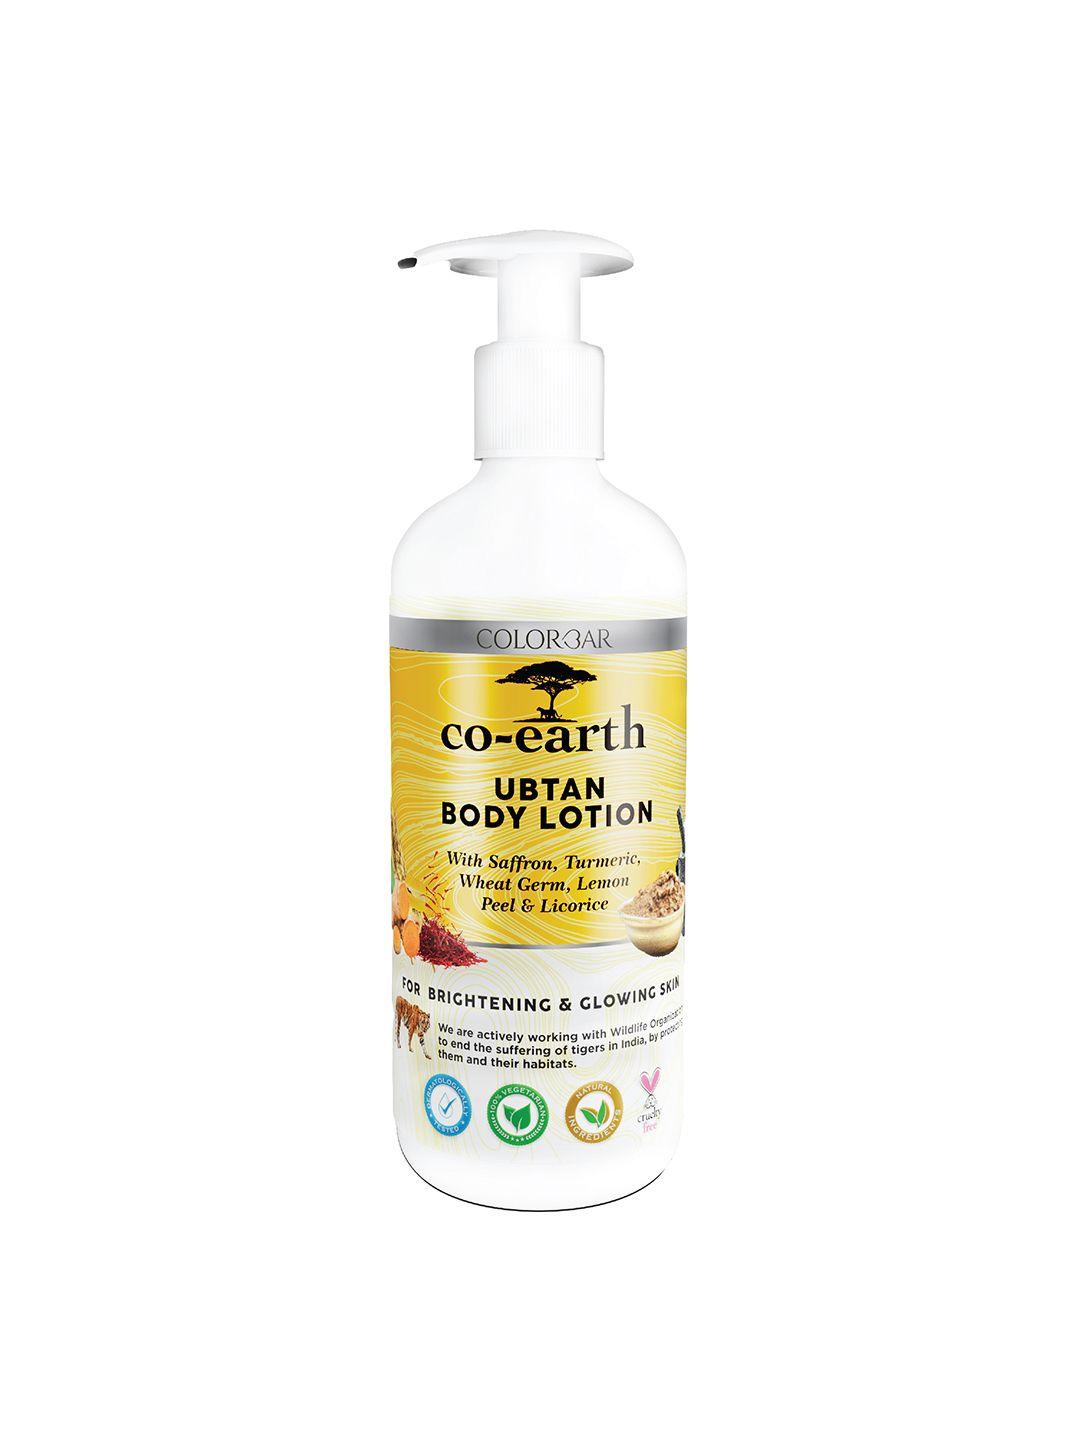 colorbar co-earth ubtan body lotion with saffron & turmeric - 200 ml